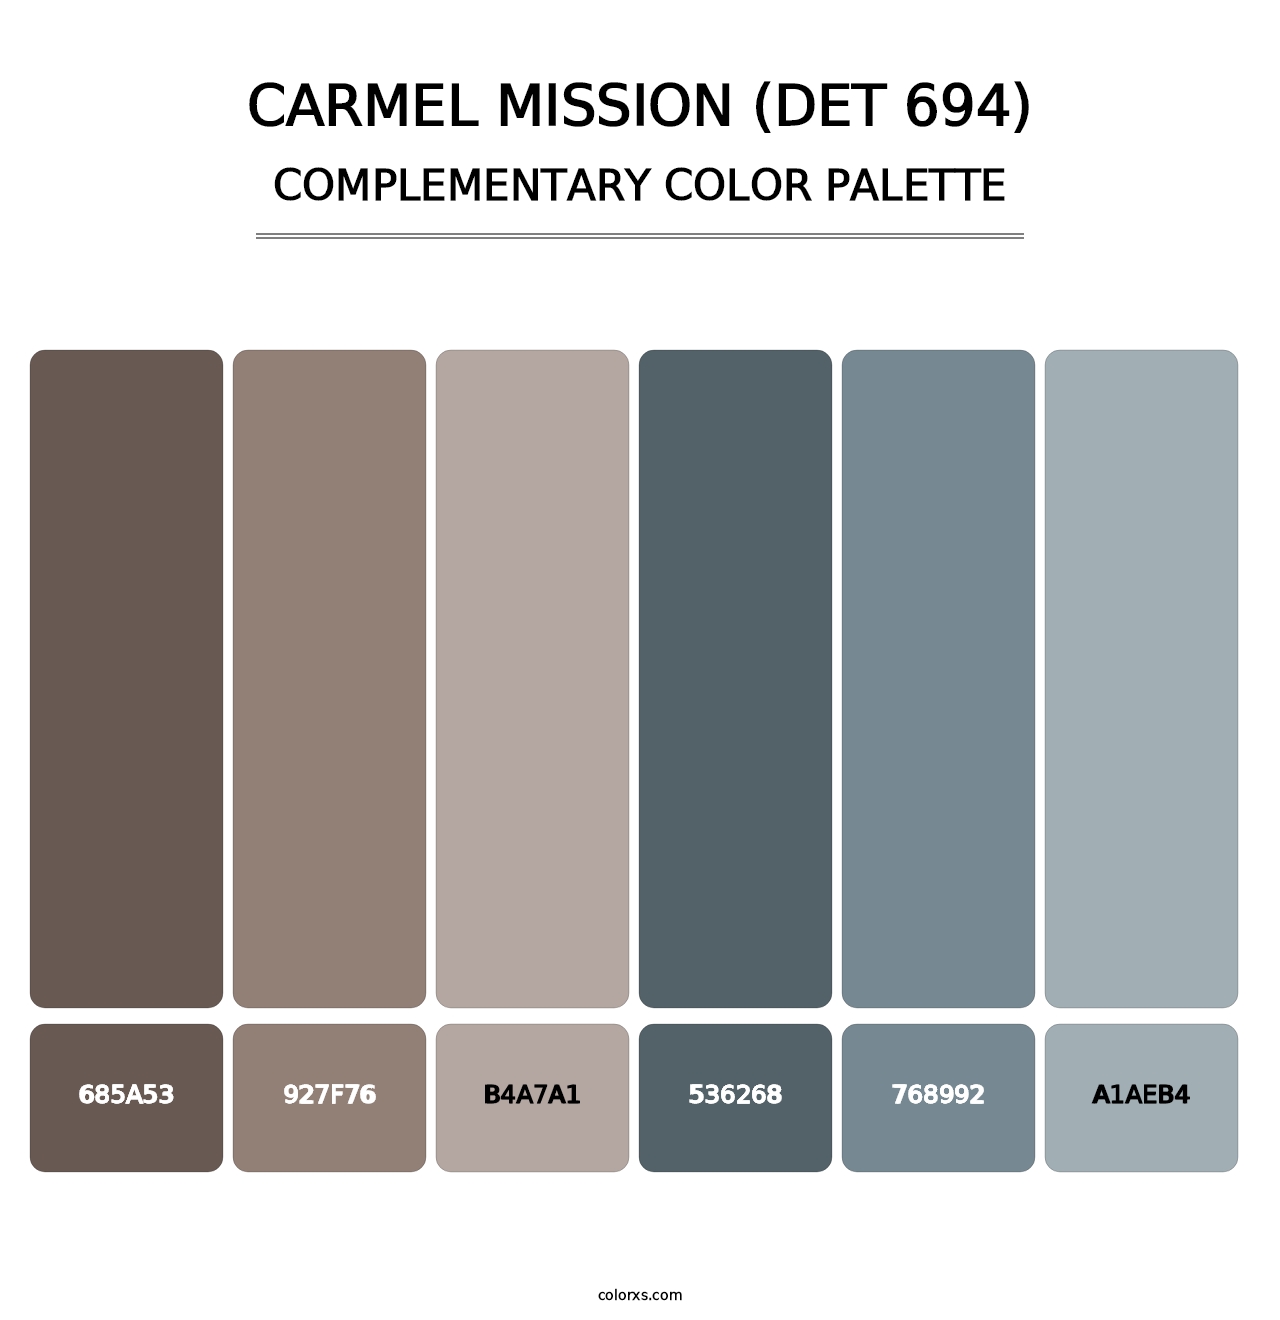 Carmel Mission (DET 694) - Complementary Color Palette